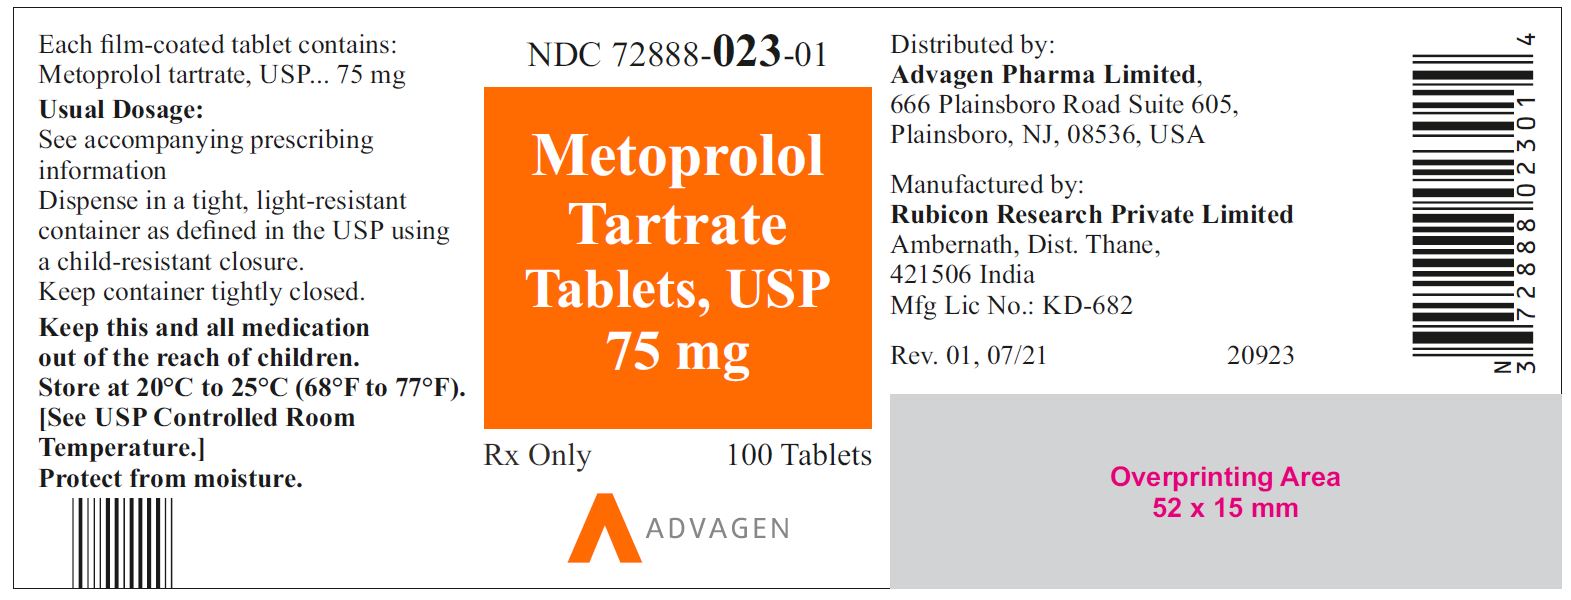 NDC 72888-023-01 - Metoprolol Tartrate Tablets, USP 75 mg - 100 Tablets